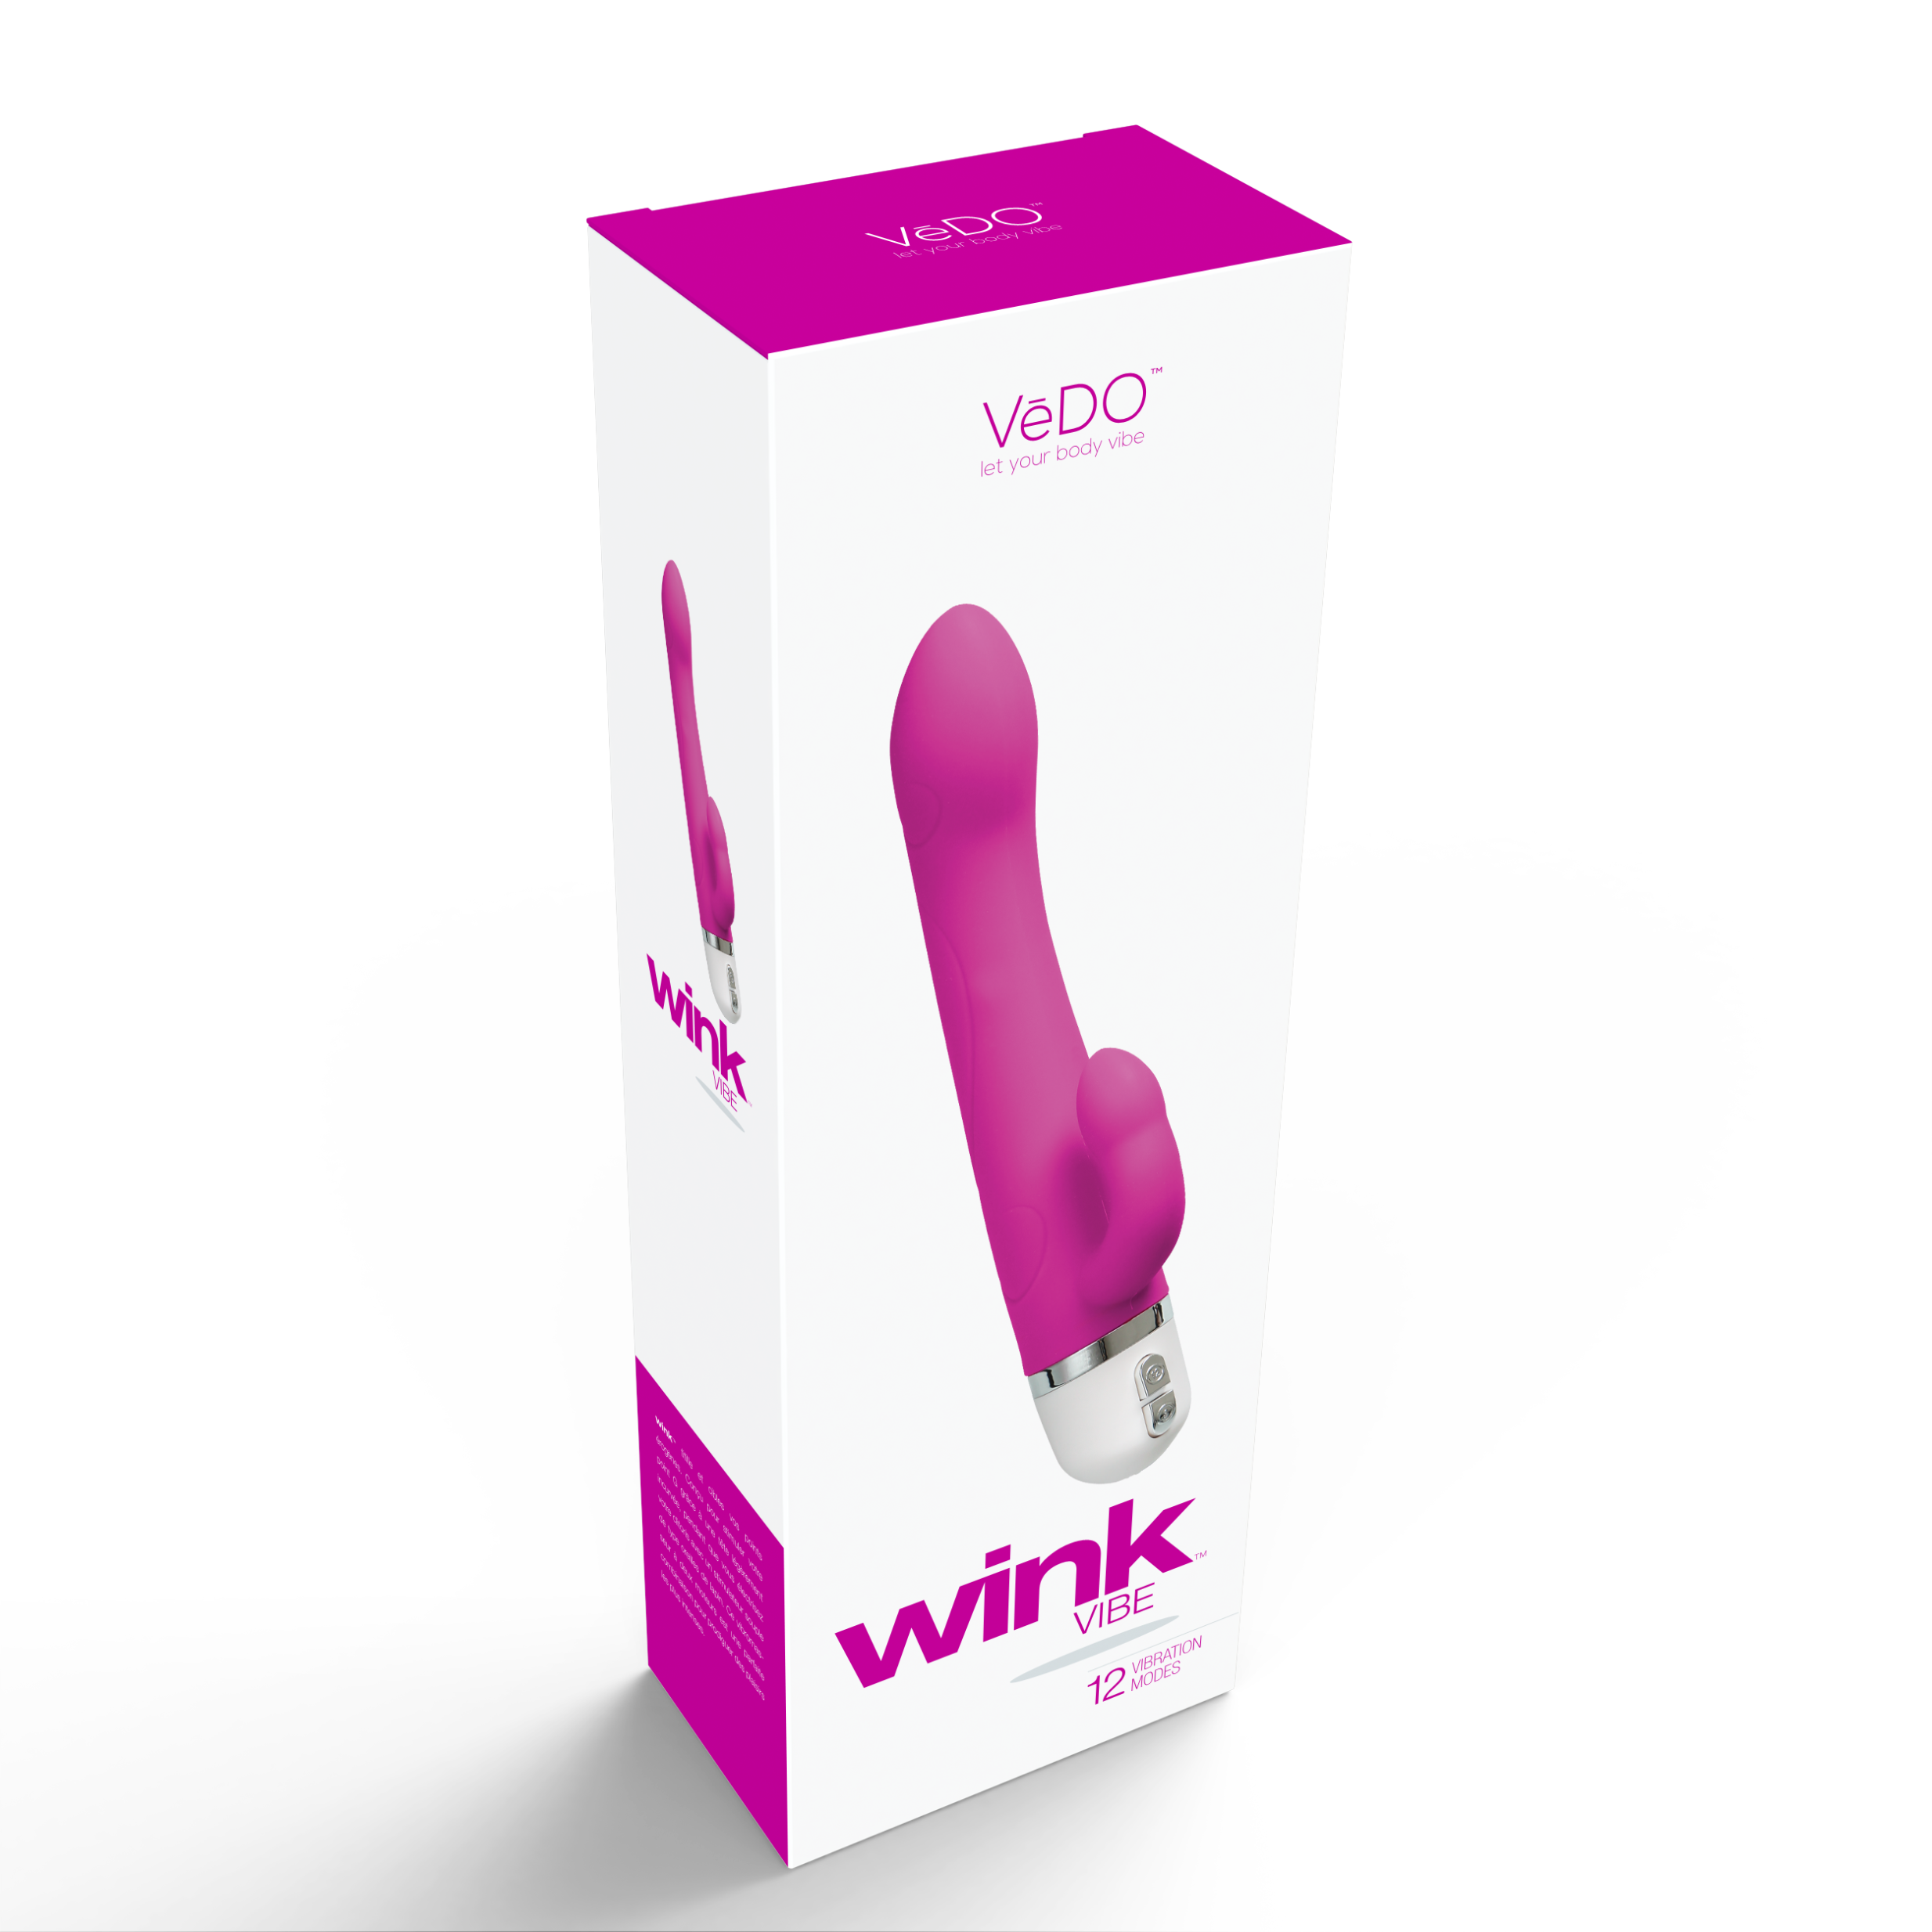 WINK G-Spot Vibrator - Experience Pure Ecstasy